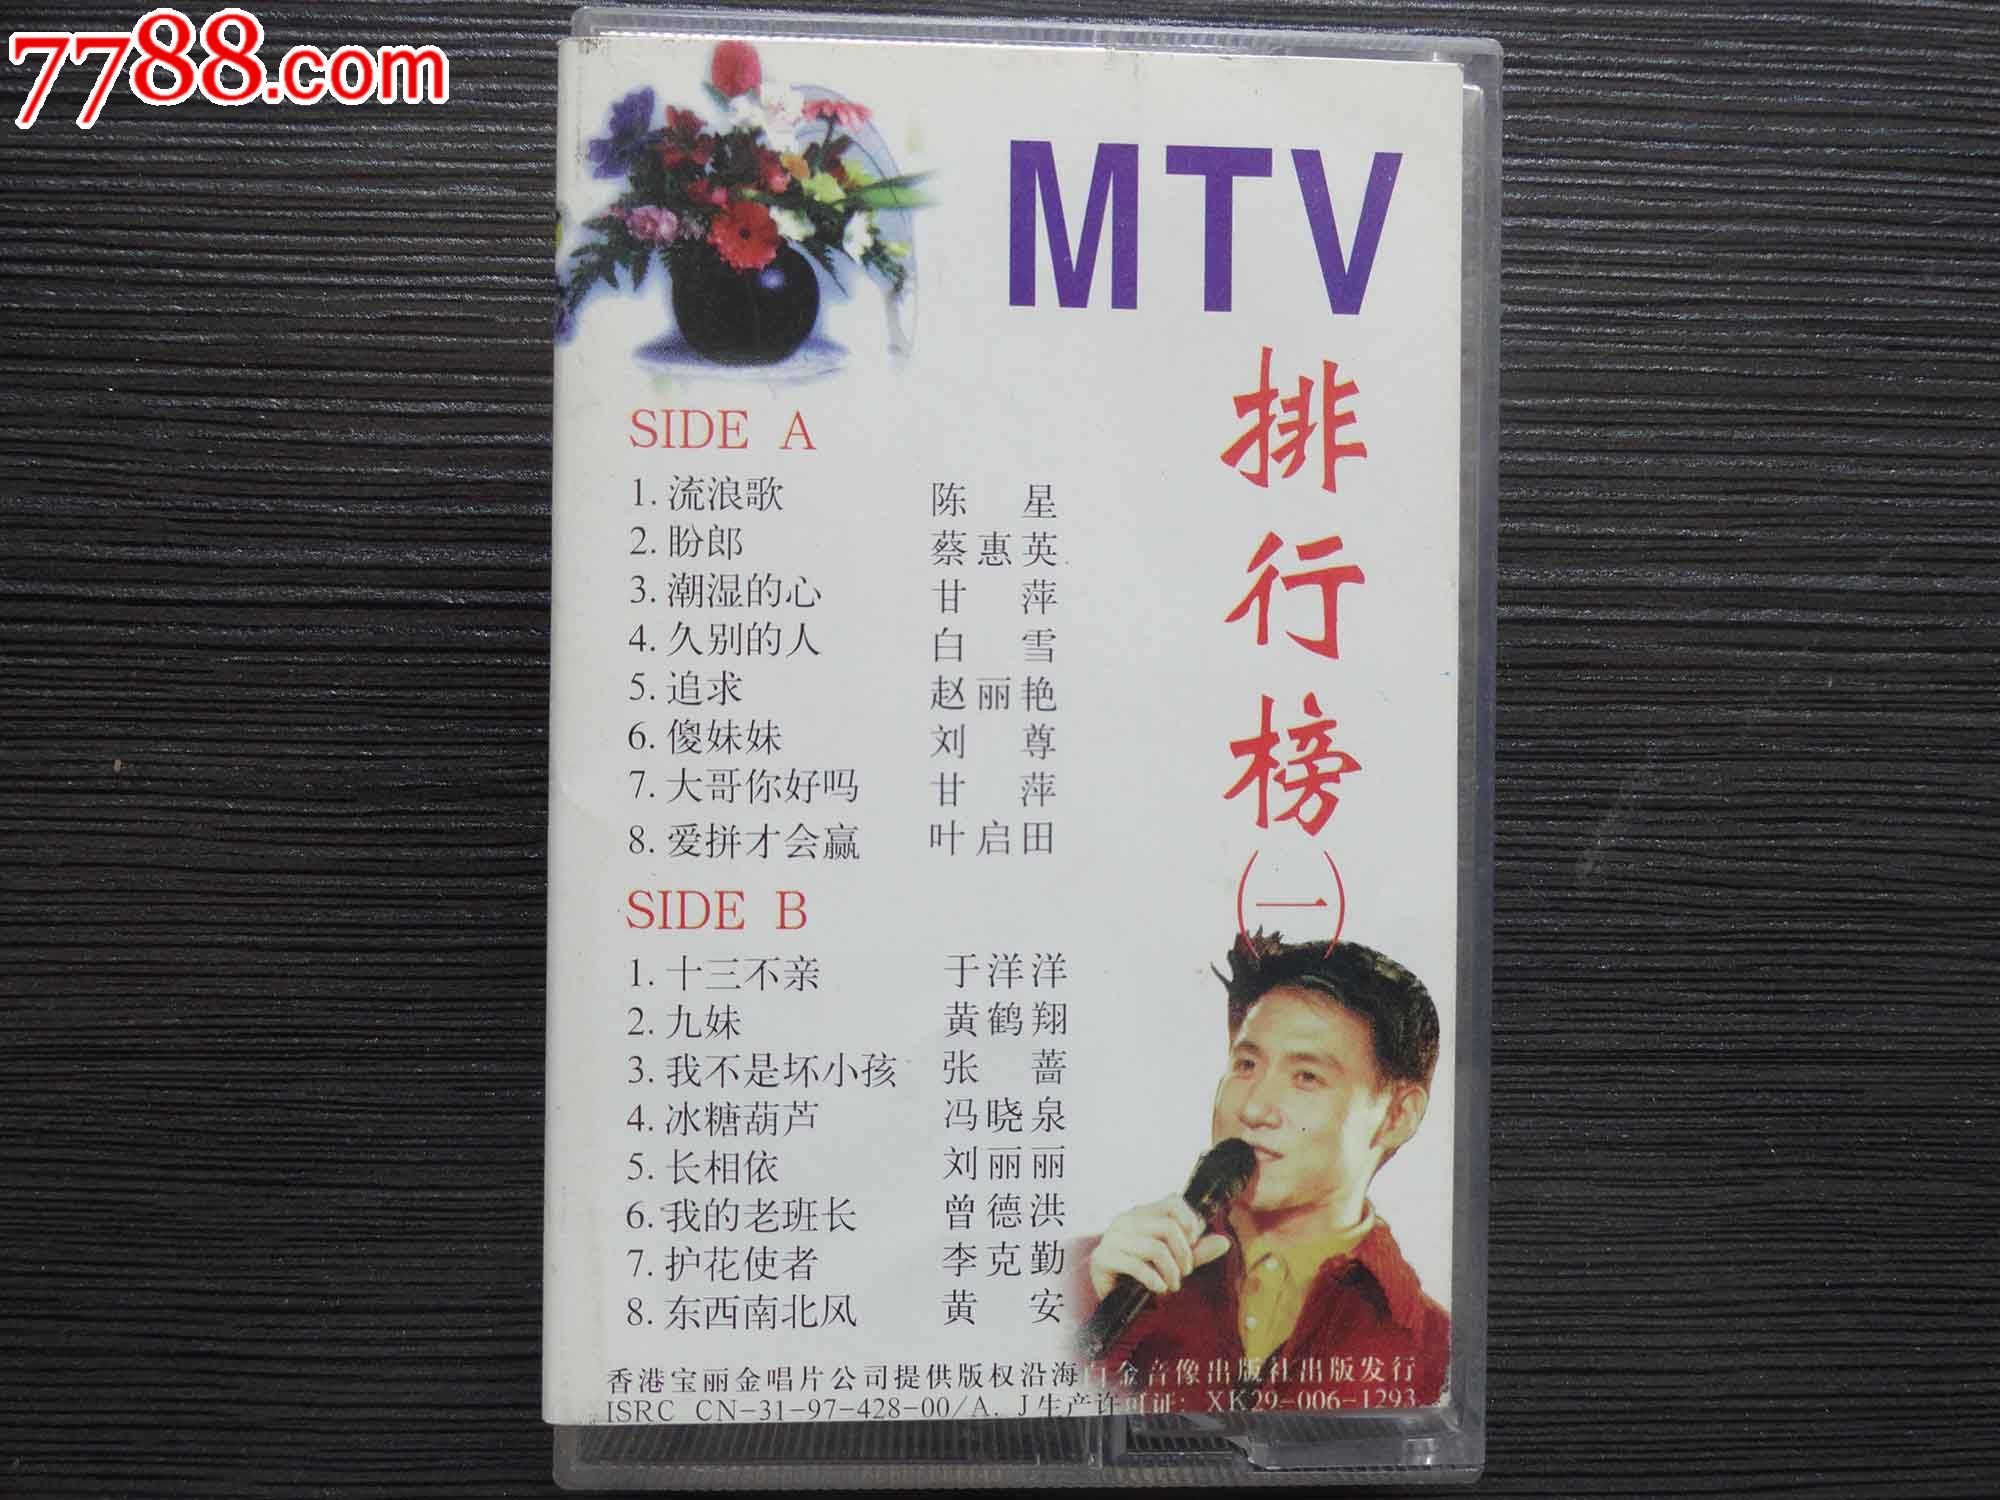 MTV-排行榜(一)流浪歌-价格:6元-se19987329-